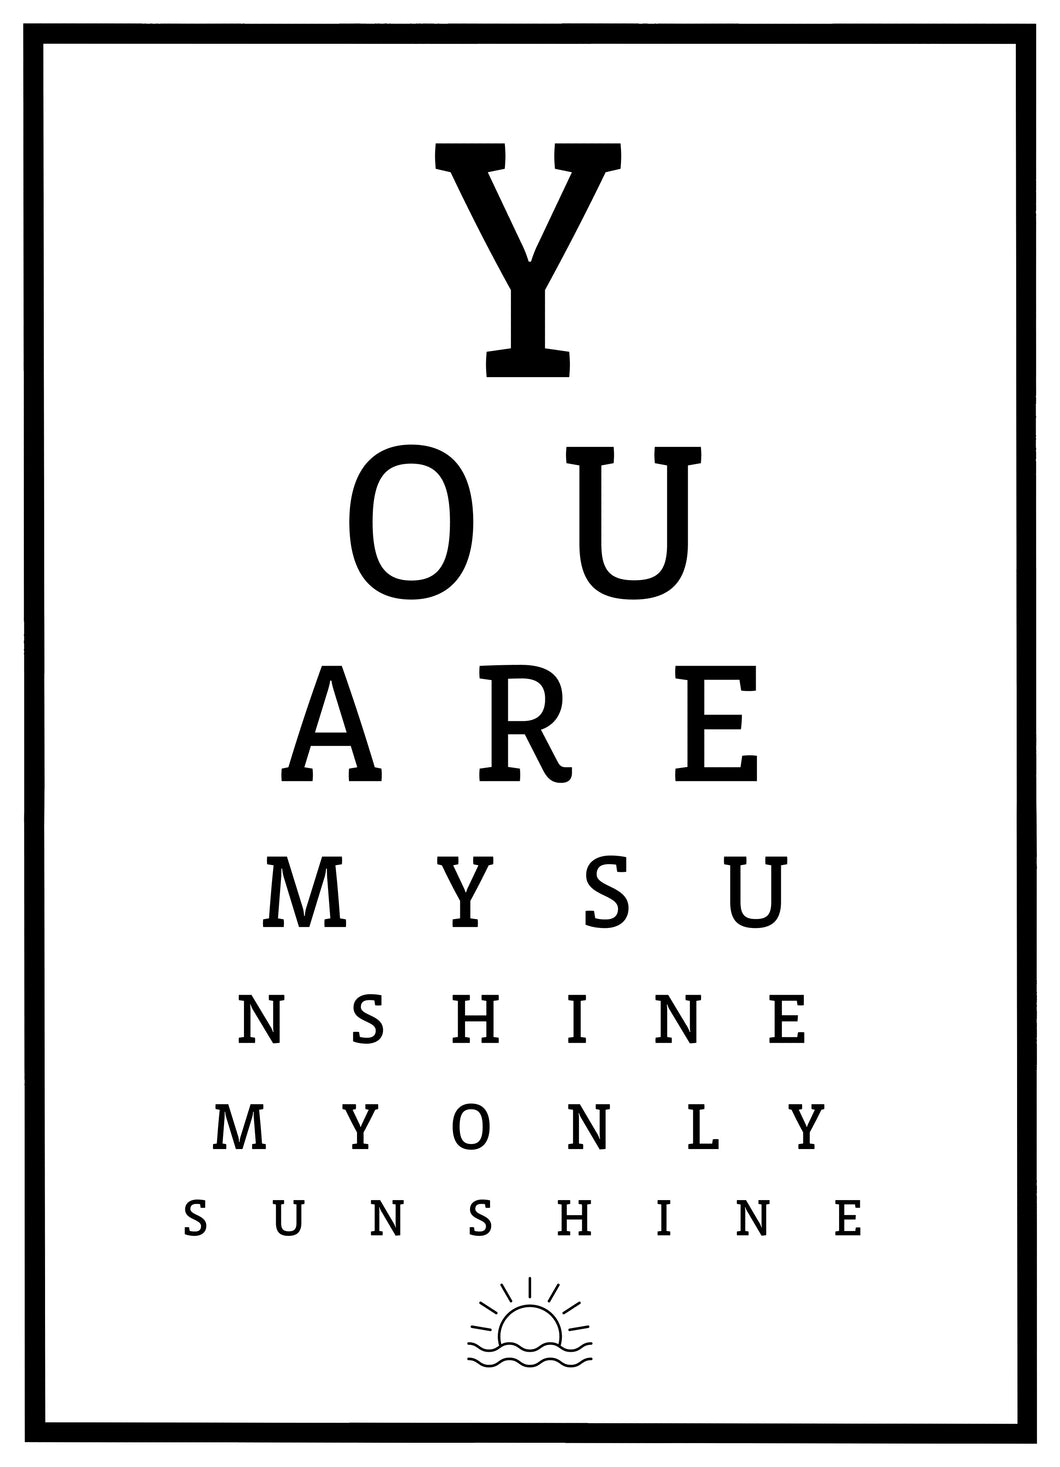 You are my Sunshine - Plakat - Bareplakater.dk